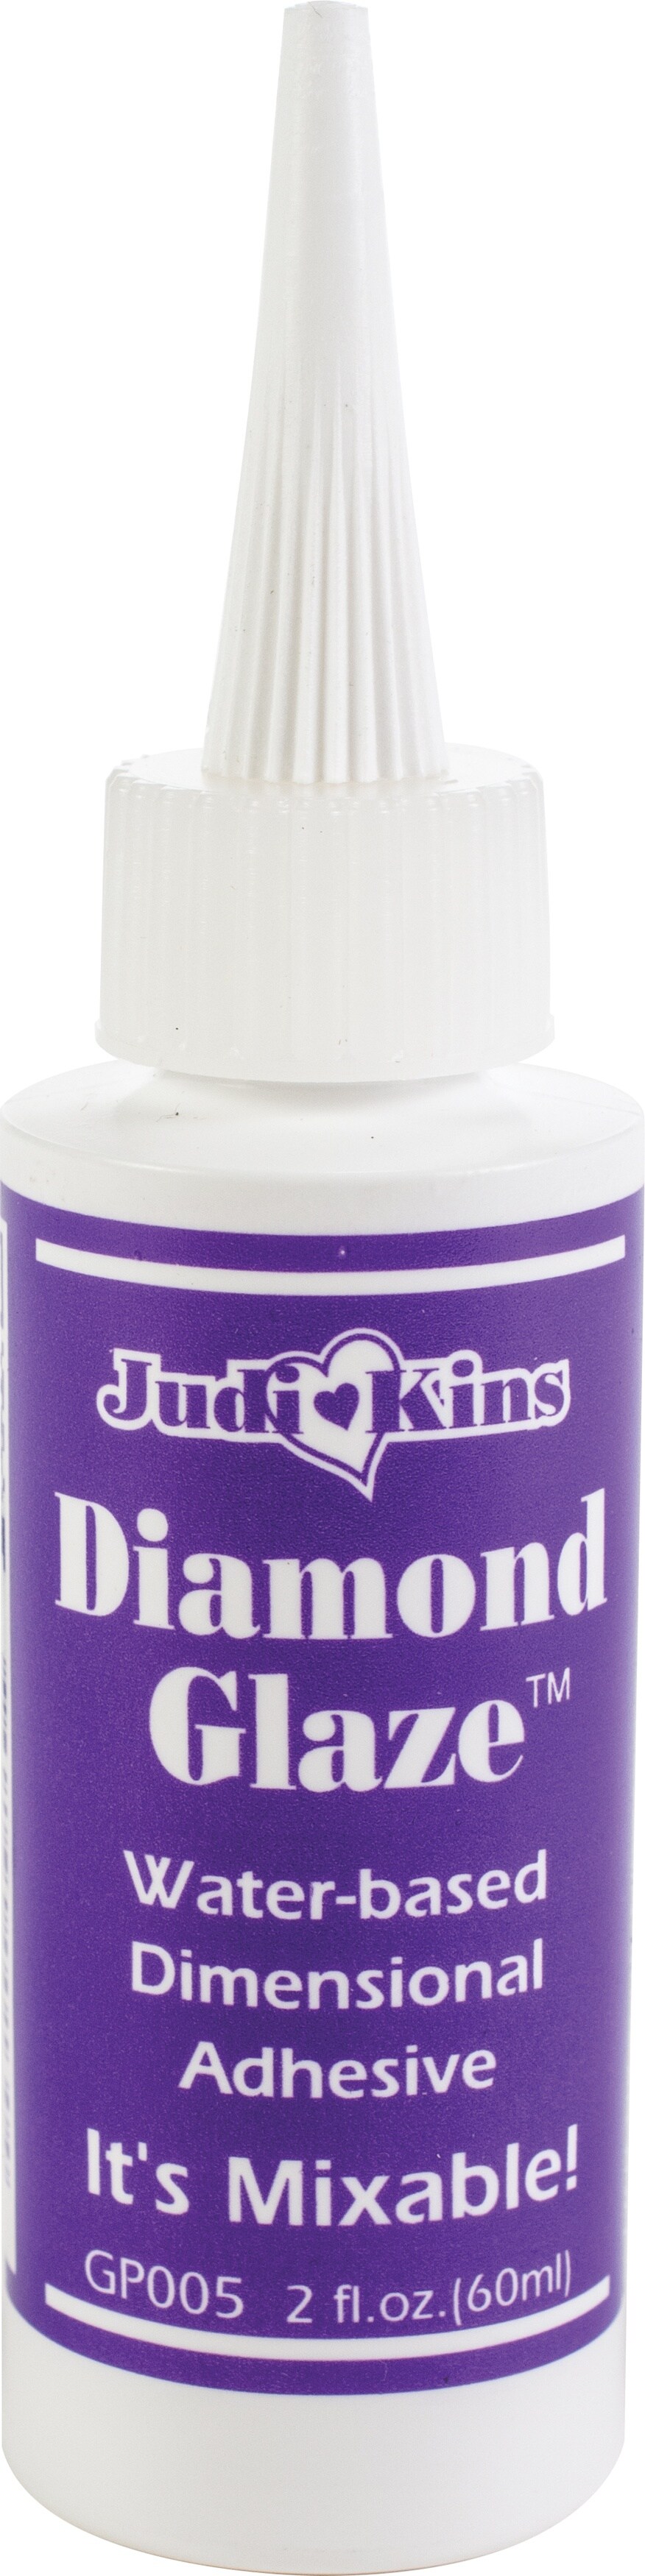 Judikins Diamond Glaze Dimensional Adhesive 2oz 5/Pkg, 5 Pack